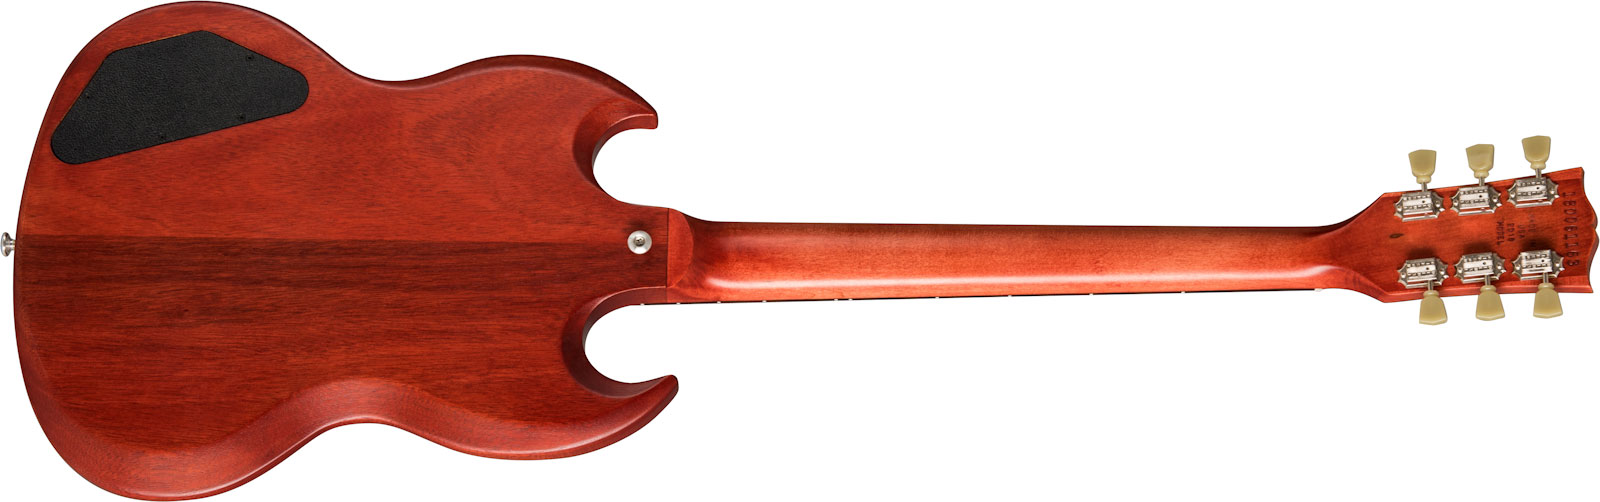 Gibson Sg Tribute Lh Modern Gaucher 2h Ht Rw - Vintage Cherry Satin - Left-handed electric guitar - Variation 1